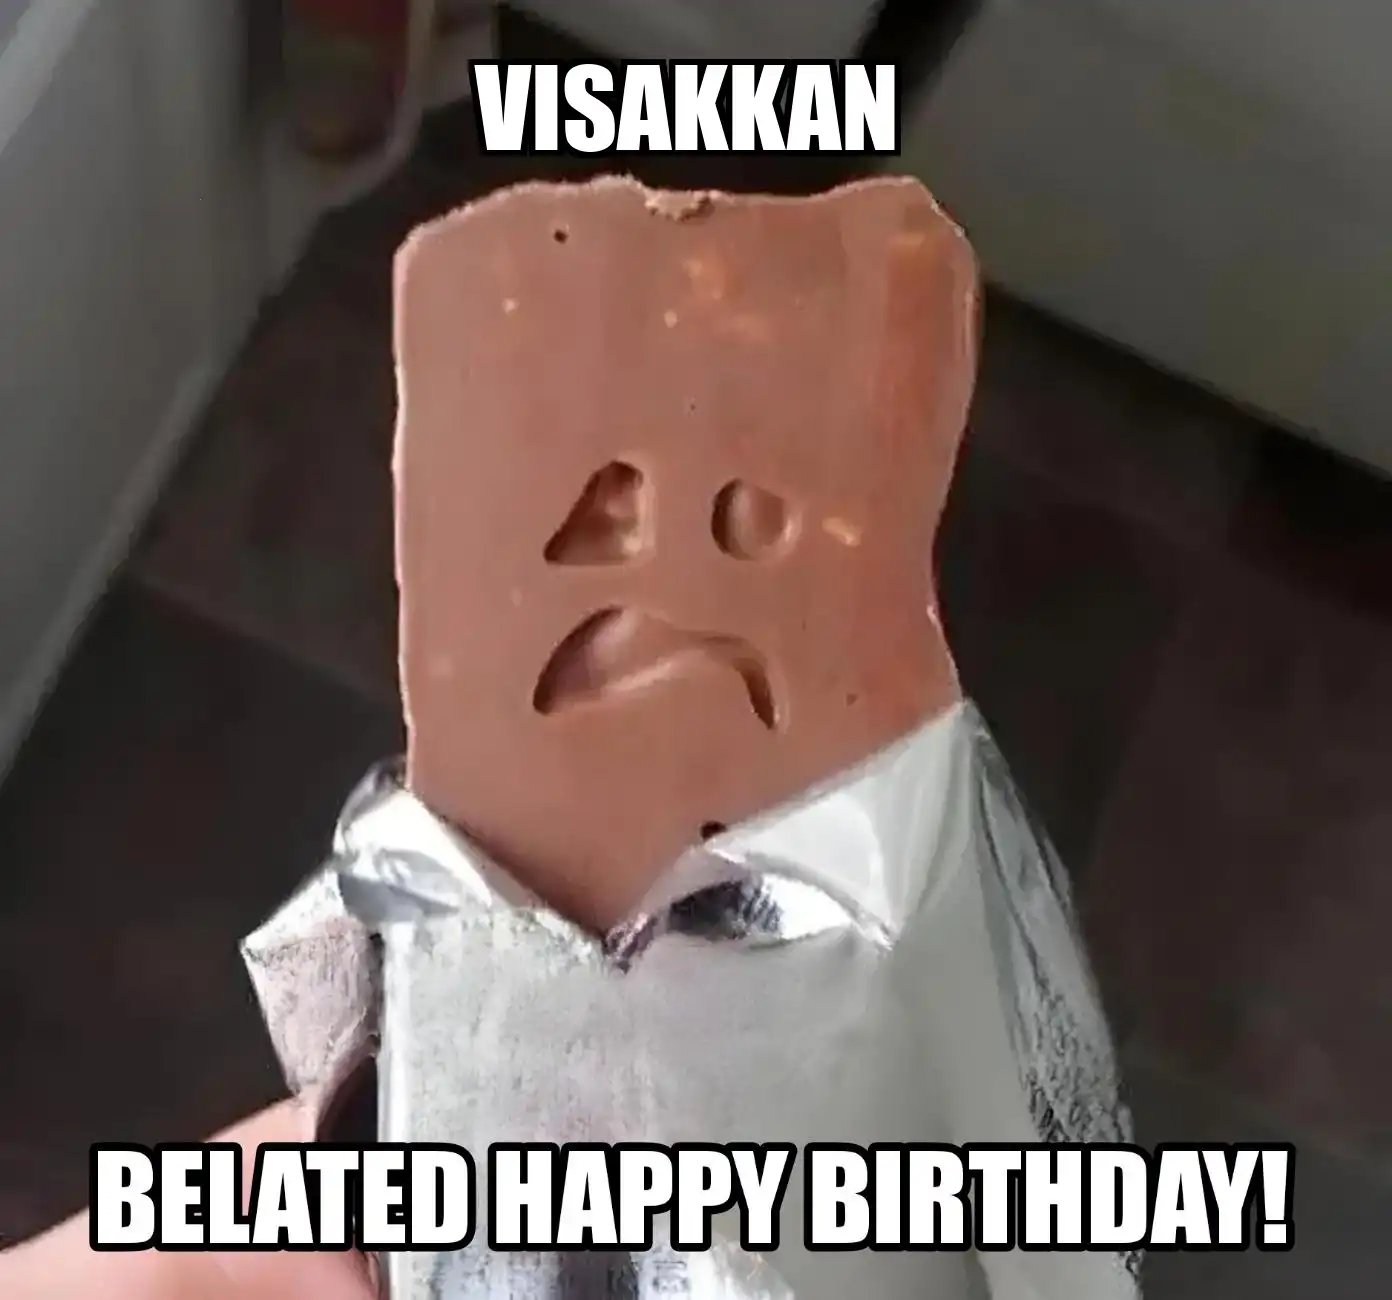 Happy Birthday Visakkan Belated Happy Birthday Meme